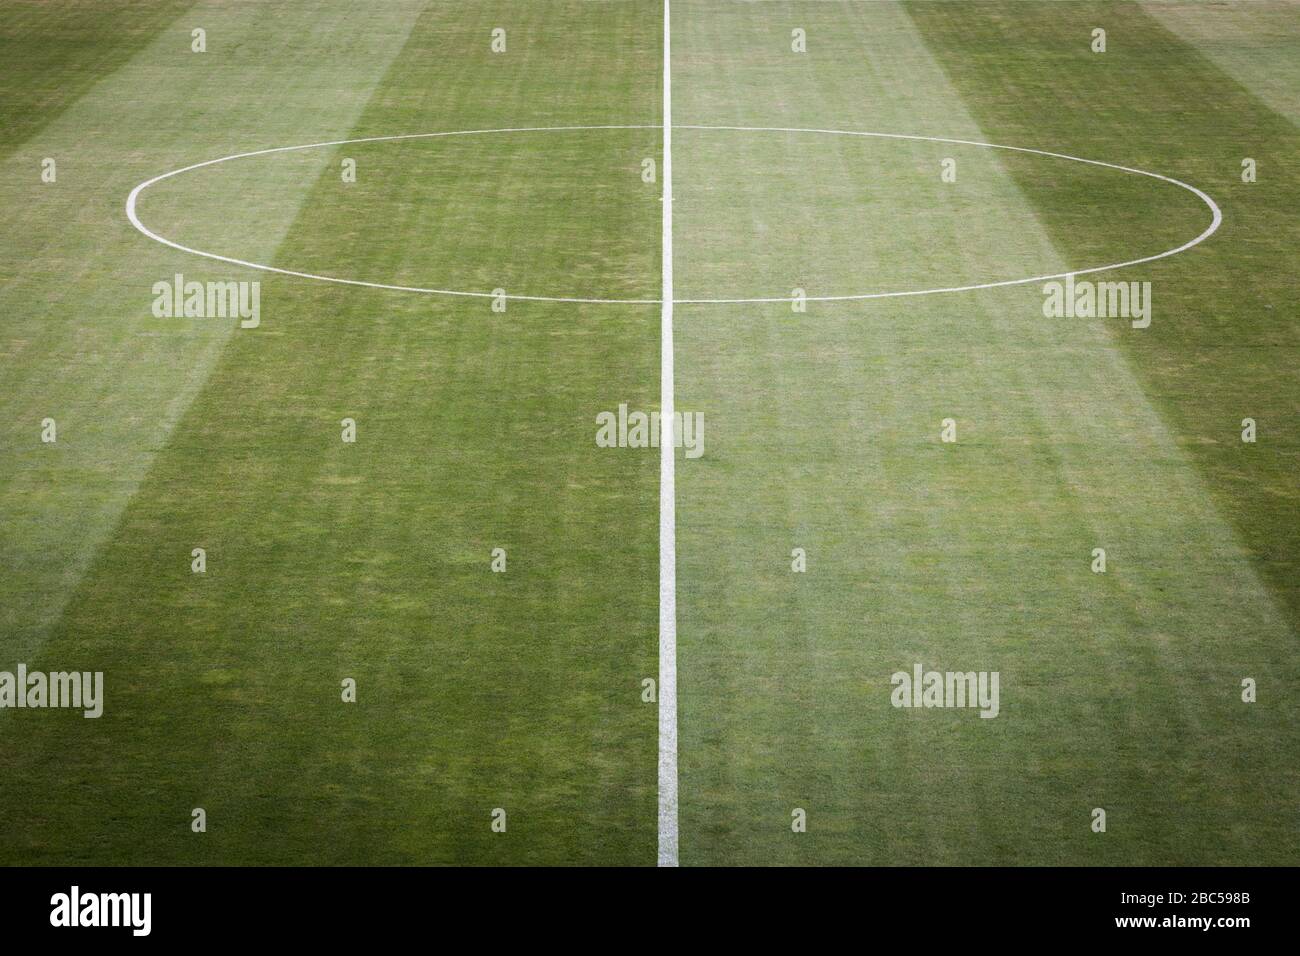 Closeup image of natural green grass soccer field, football field, team sport texture, top view Stock Photo